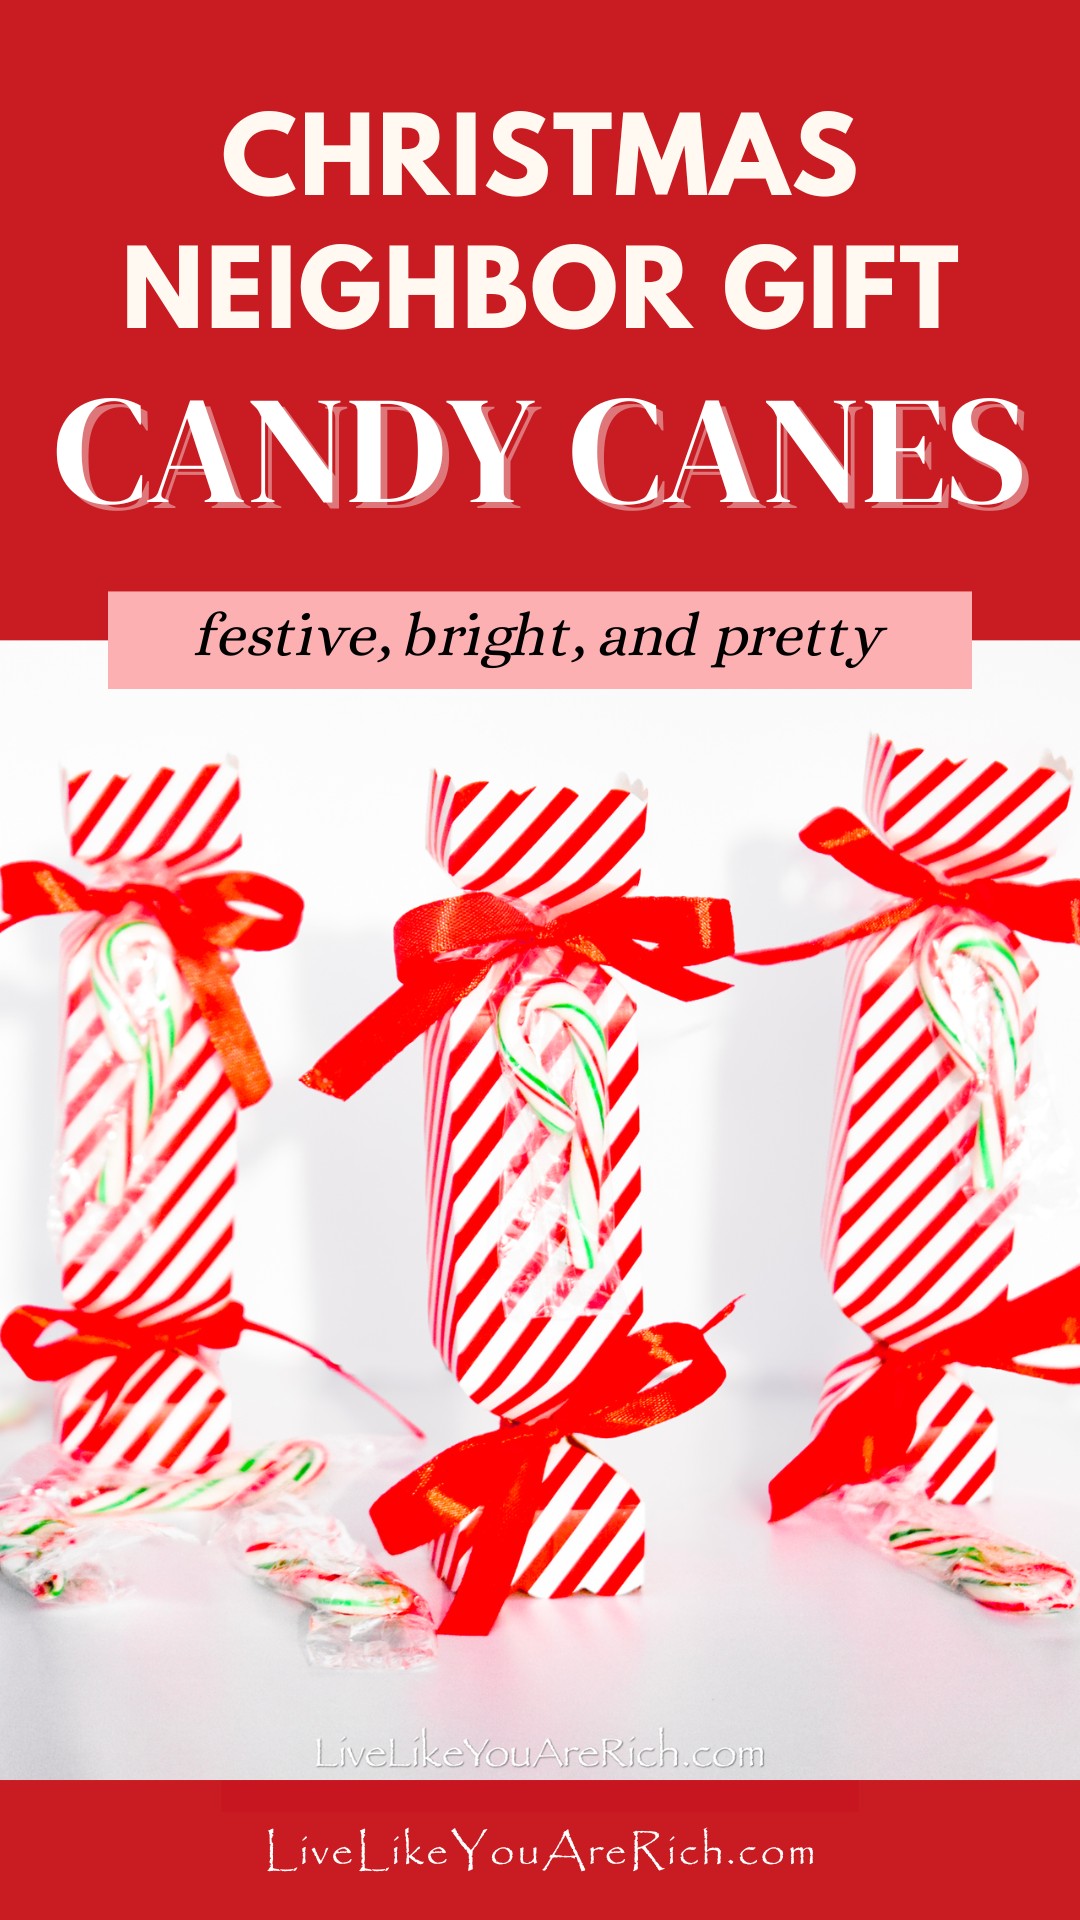 Neighbor Christmas Gift: Candy Canes